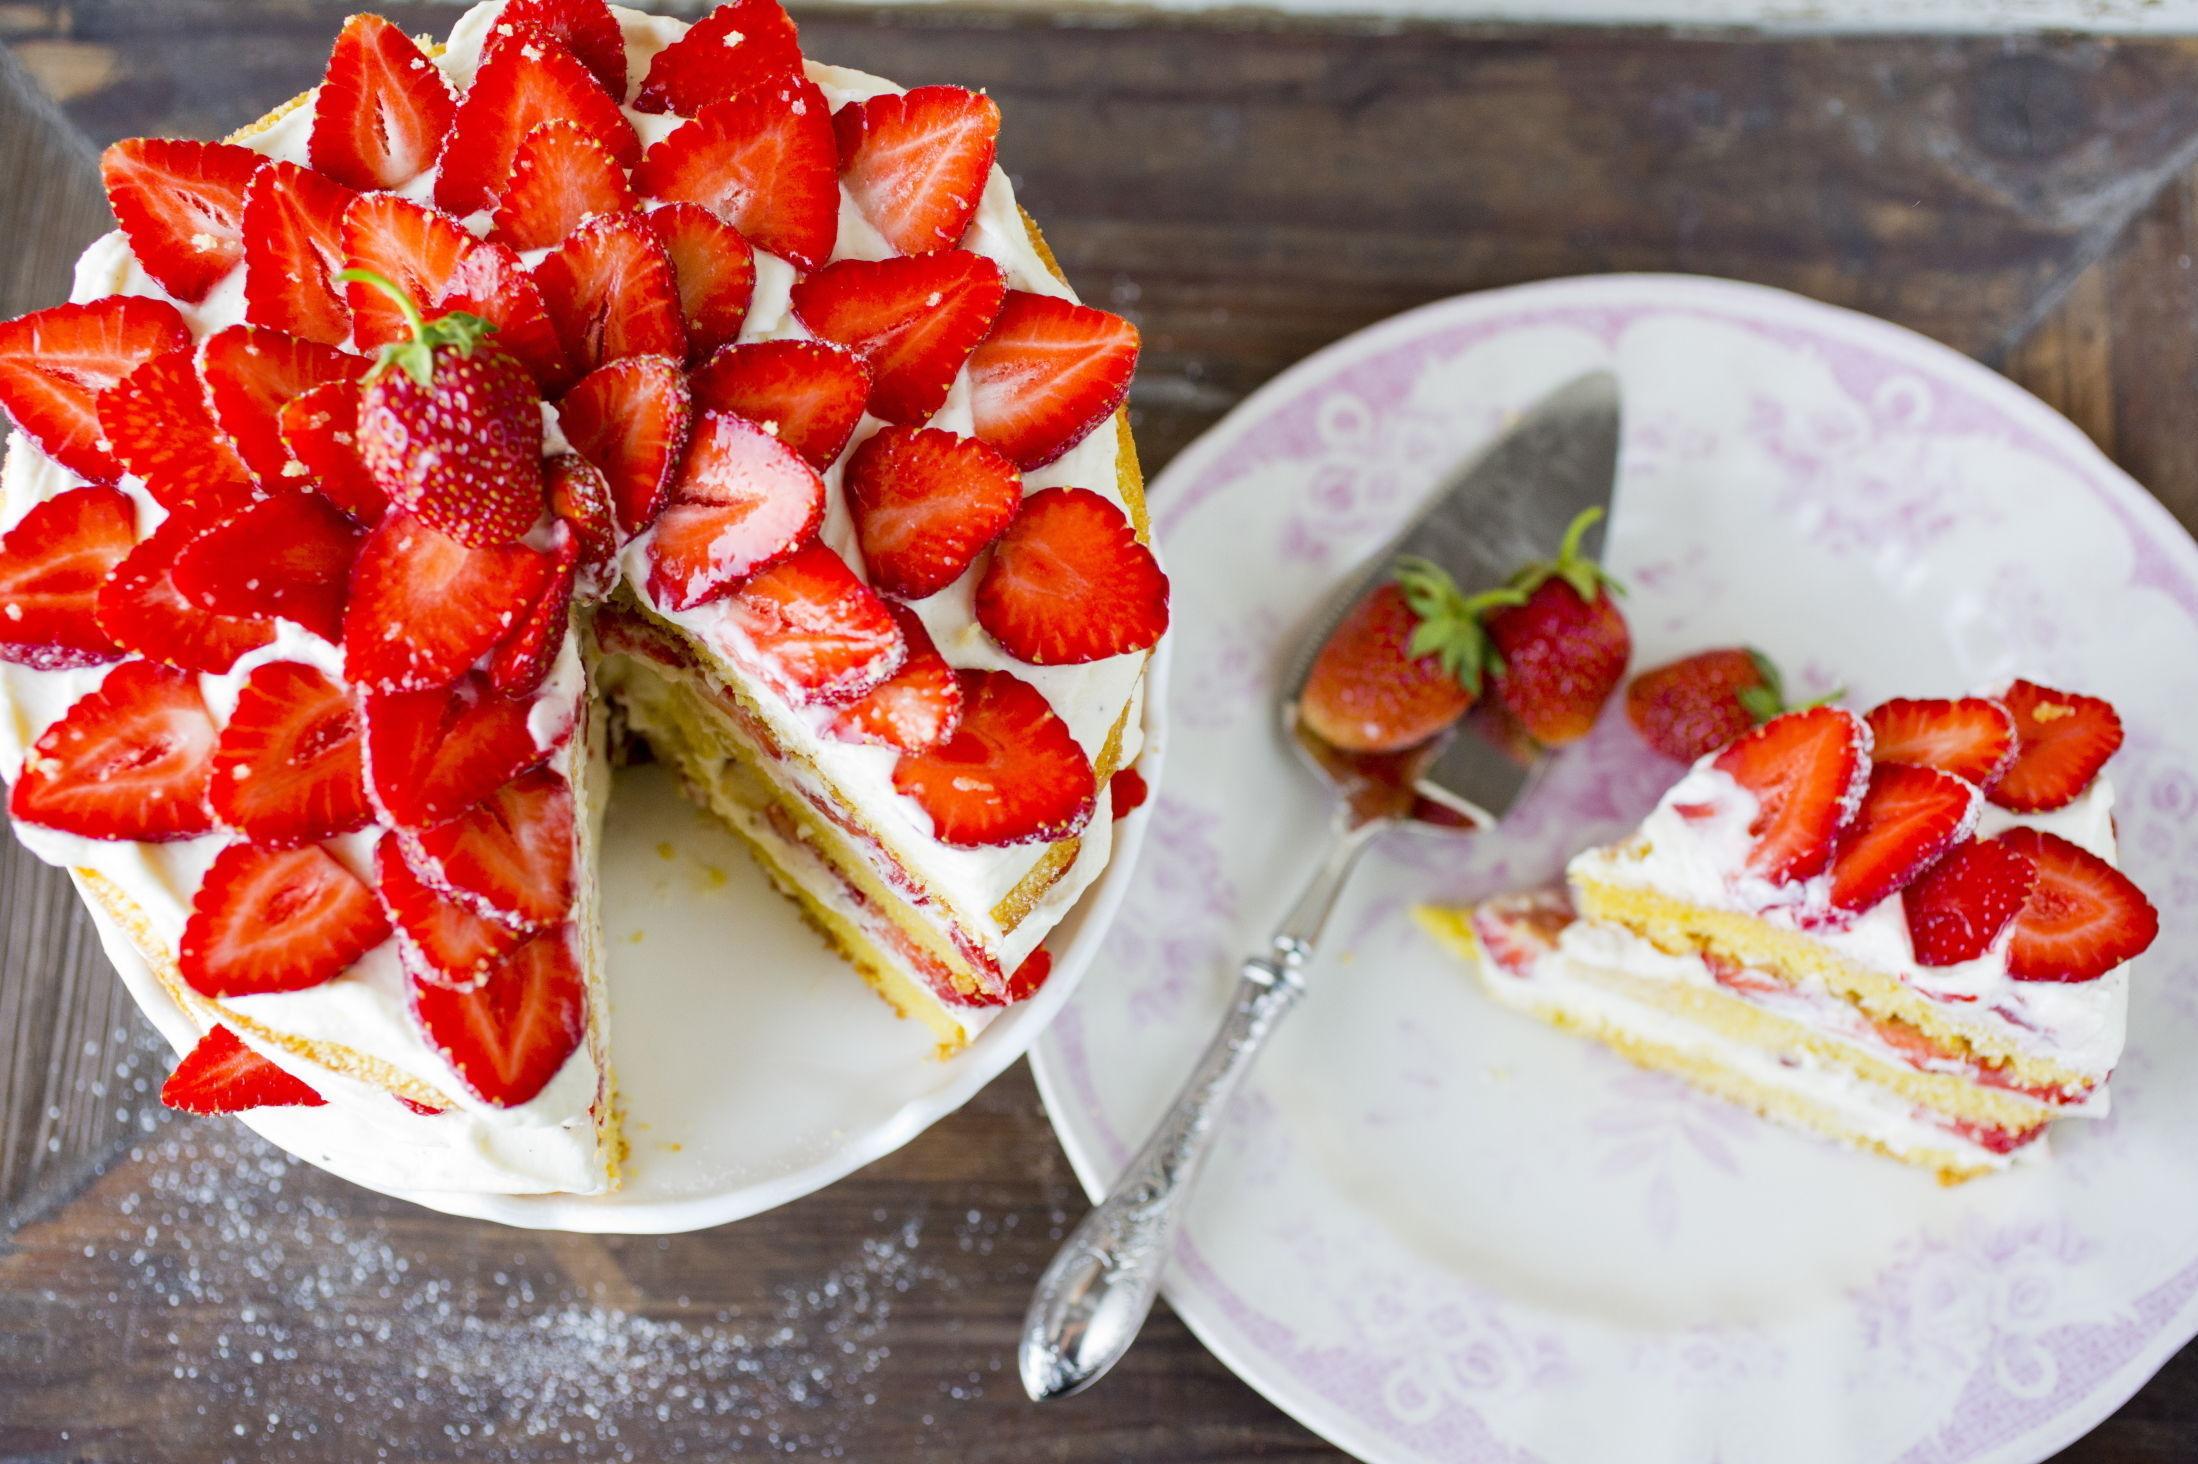 LEKKERT: Sukkerbrød, krem og norske jordbær - vips, så har du en lekker kake til kaffen. Foto: Sara Johannessen / VG